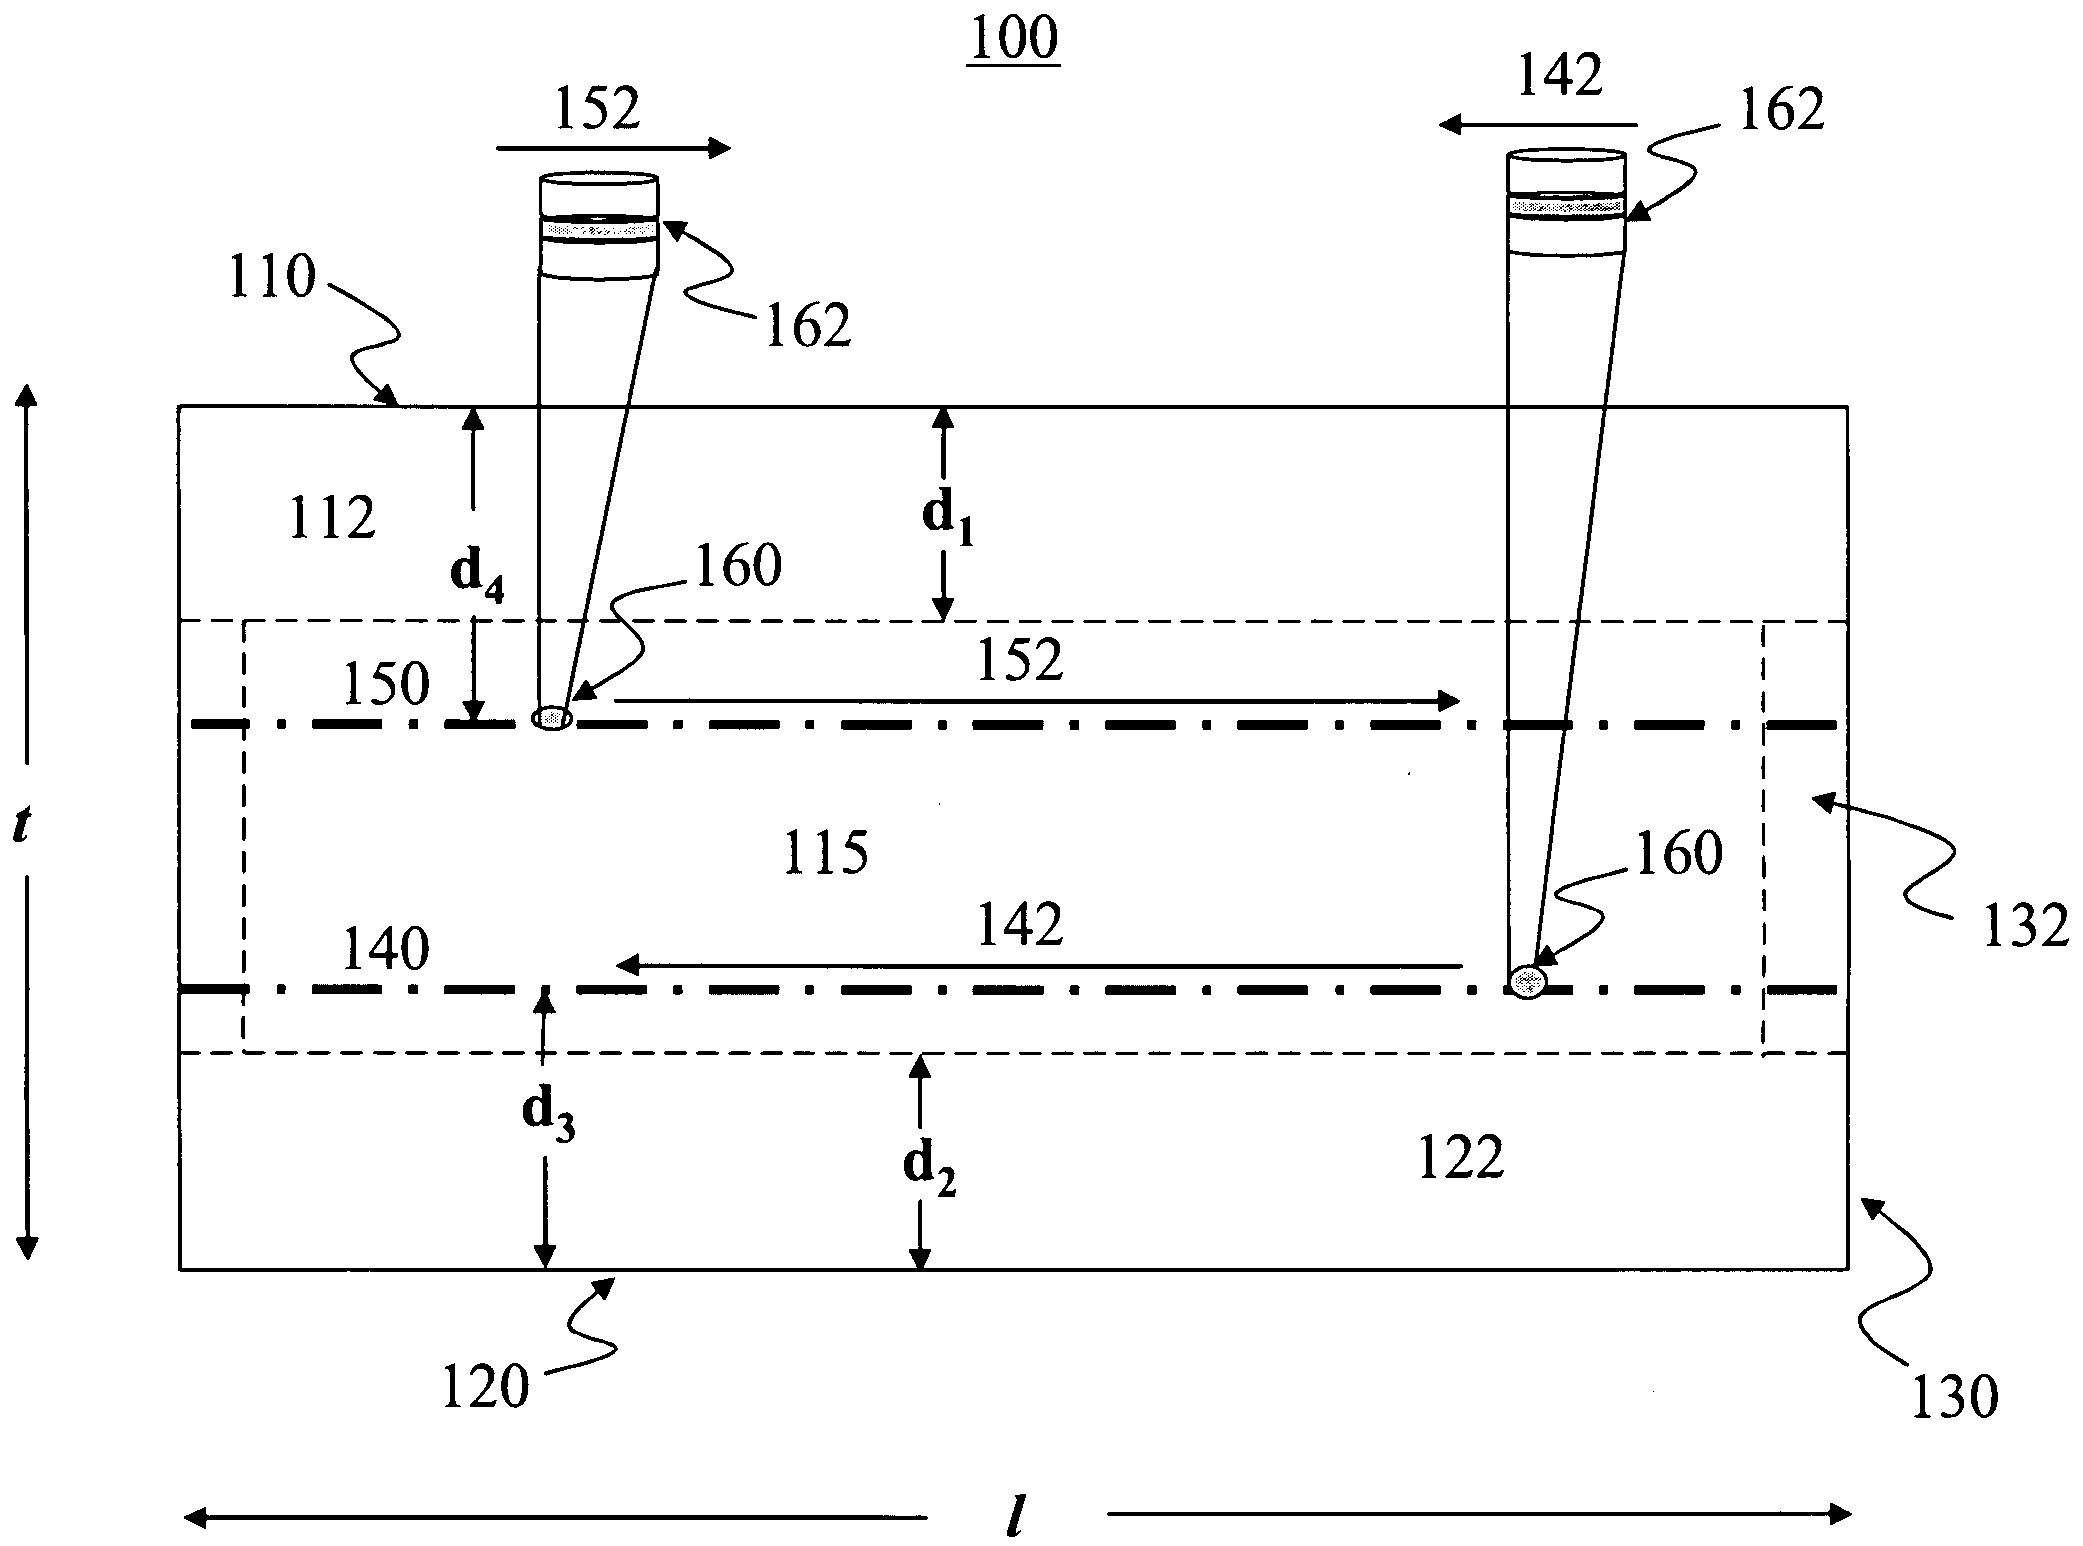 Method of separating strengthened glass